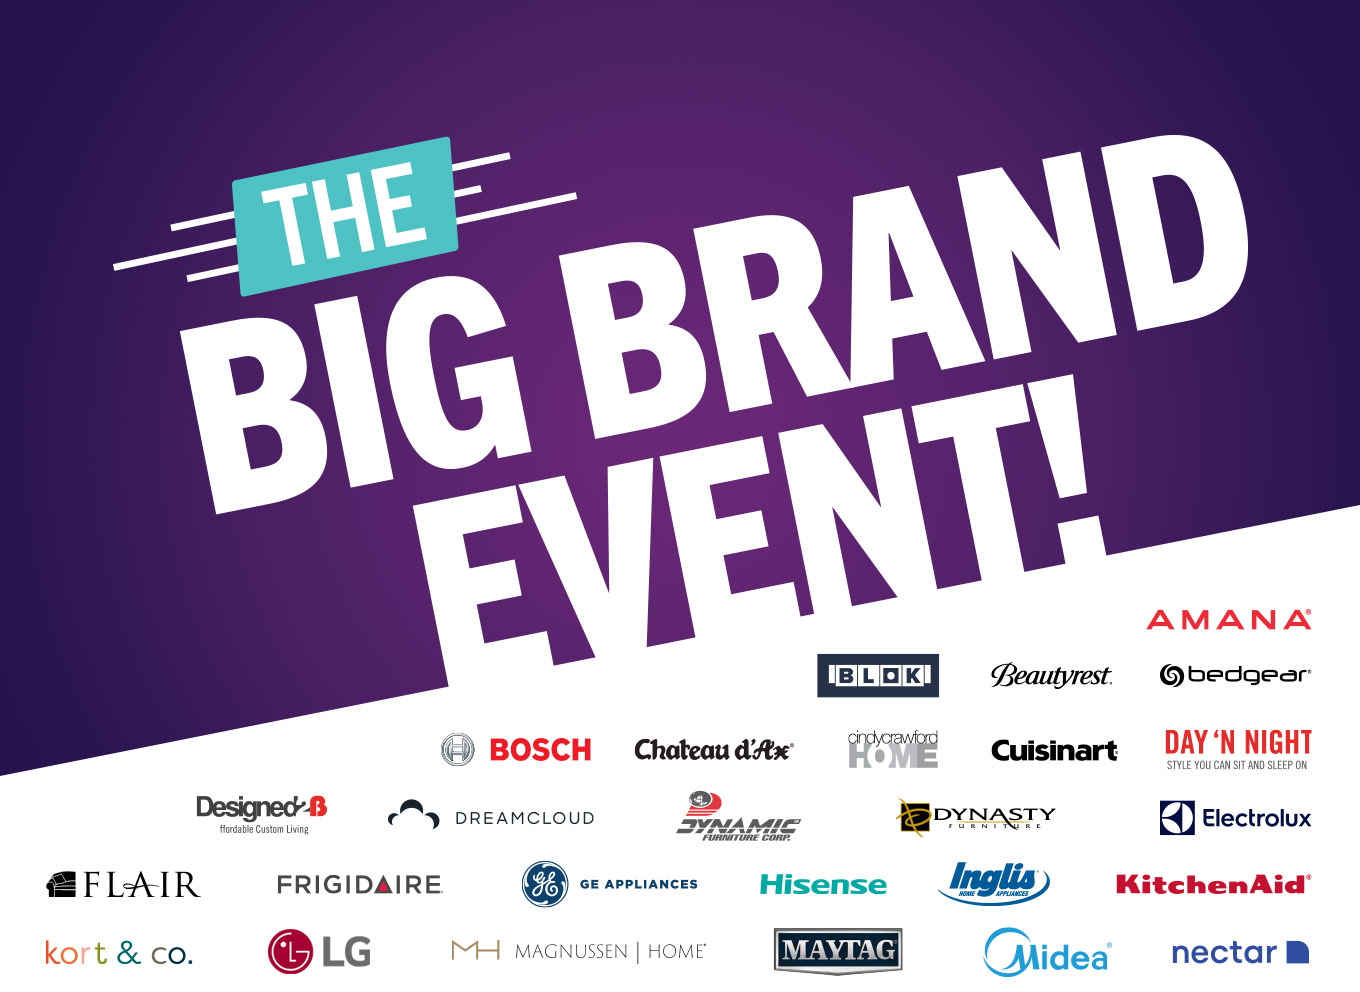 The Big Brand Event.